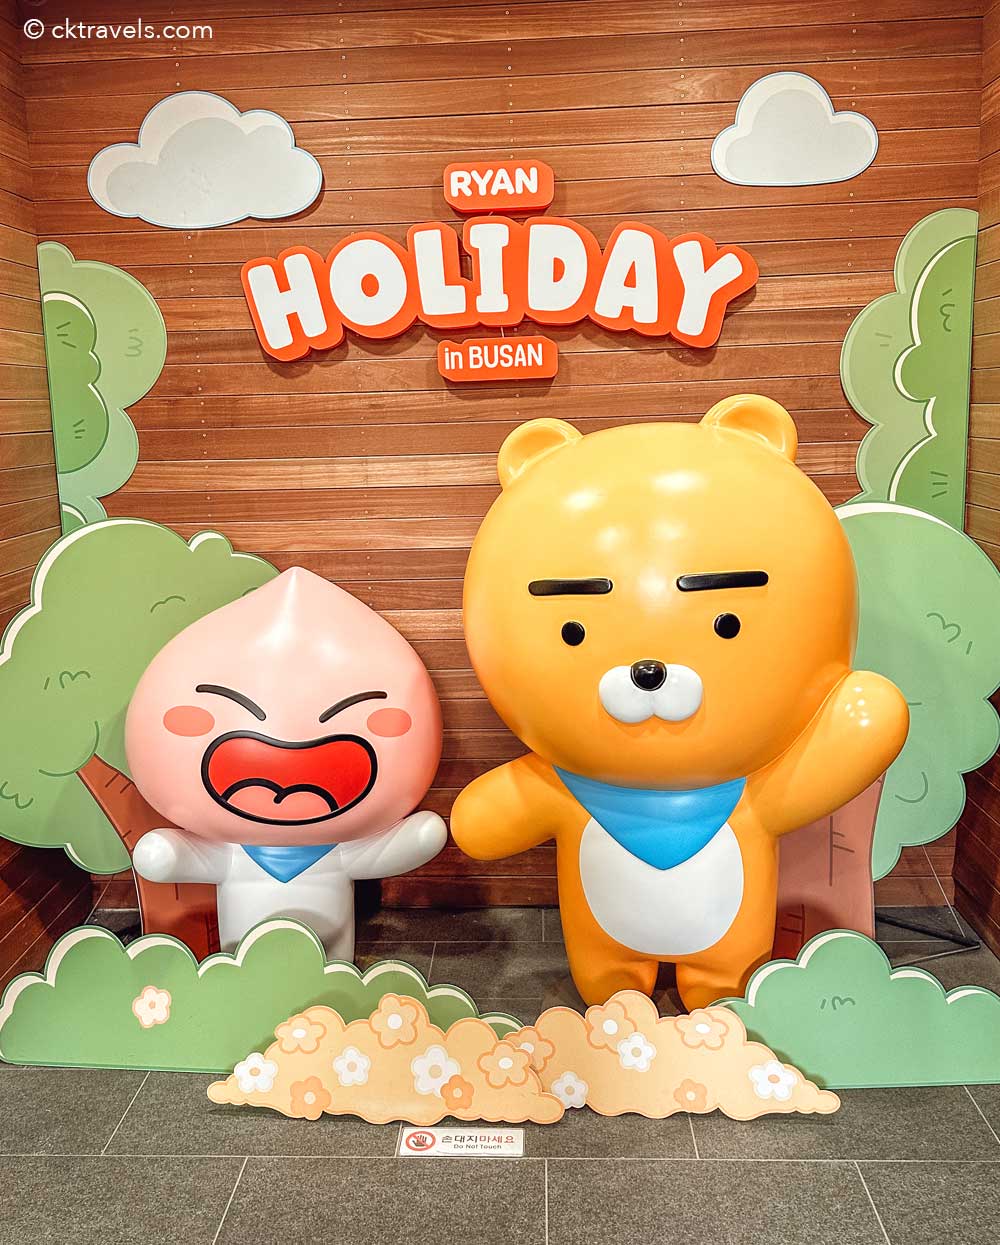 Ryan Holiday in Busan